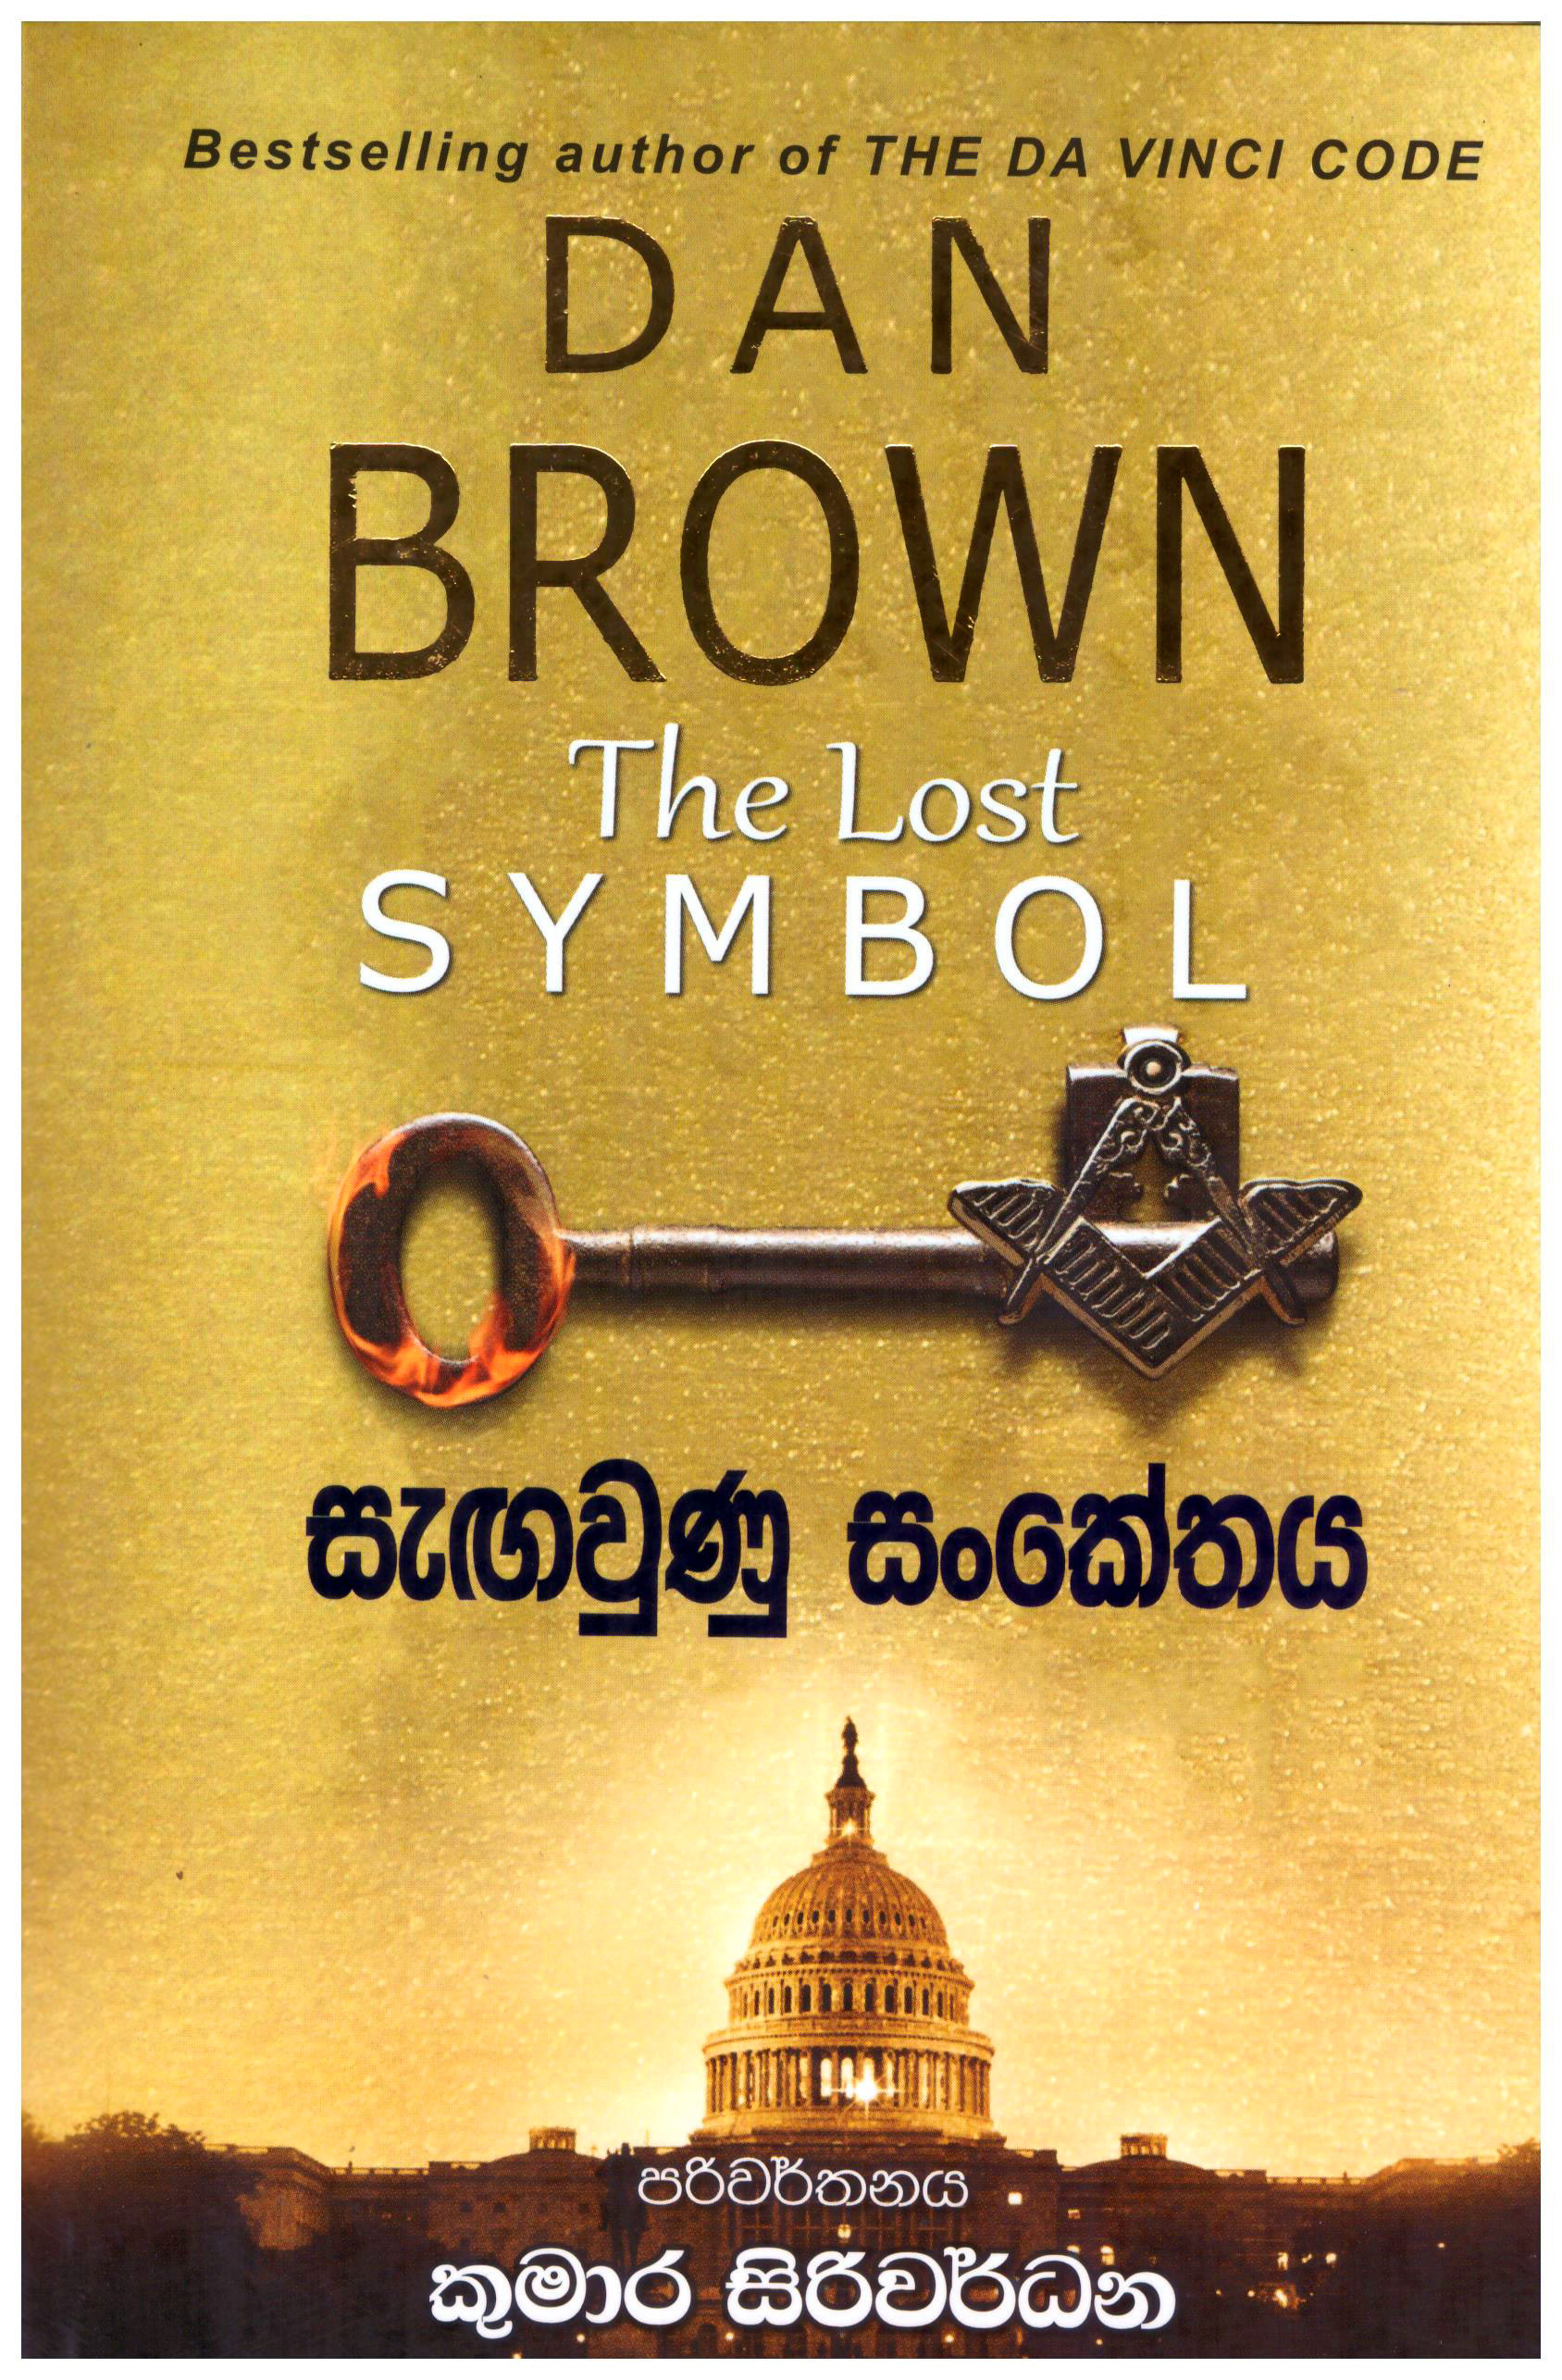 Segawunu Sankethaya - Translations of The Lost Symbol By Dan Brown